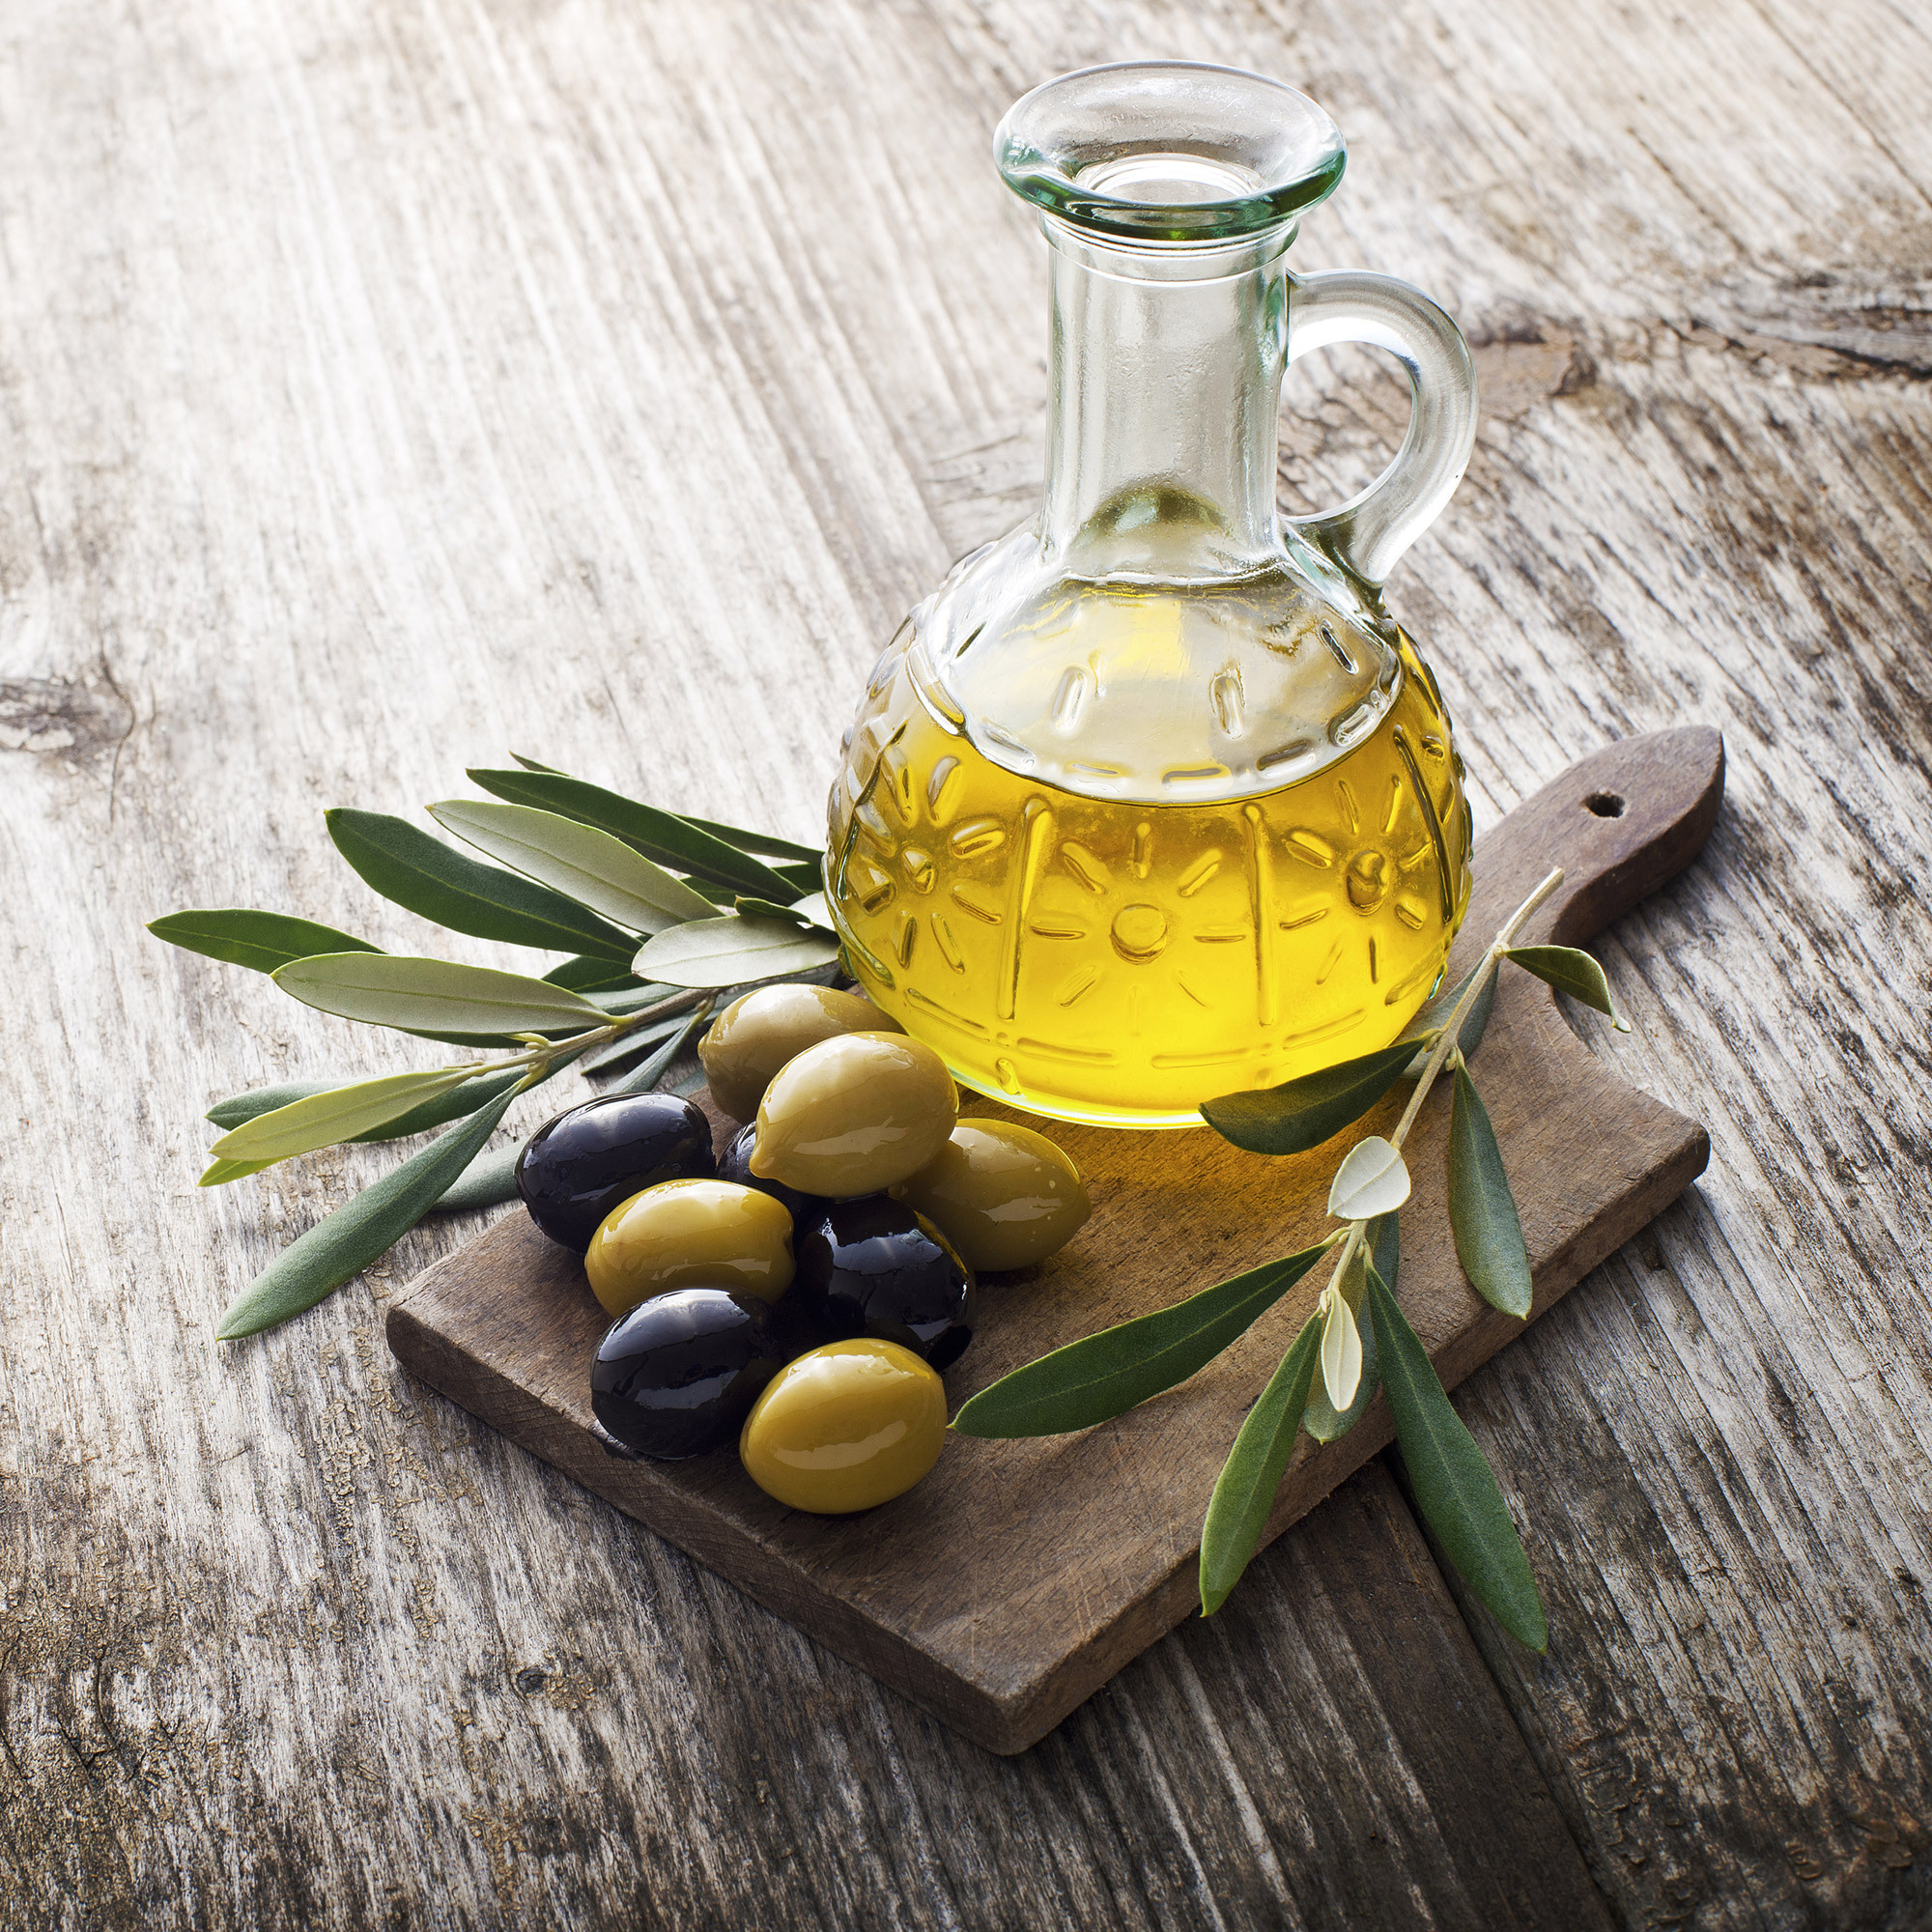 Olive Oil масло оливковое. Olive Olive для масла. Оливки и оливковое масло. Масло оливковое в графине. Сорта оливкового масла